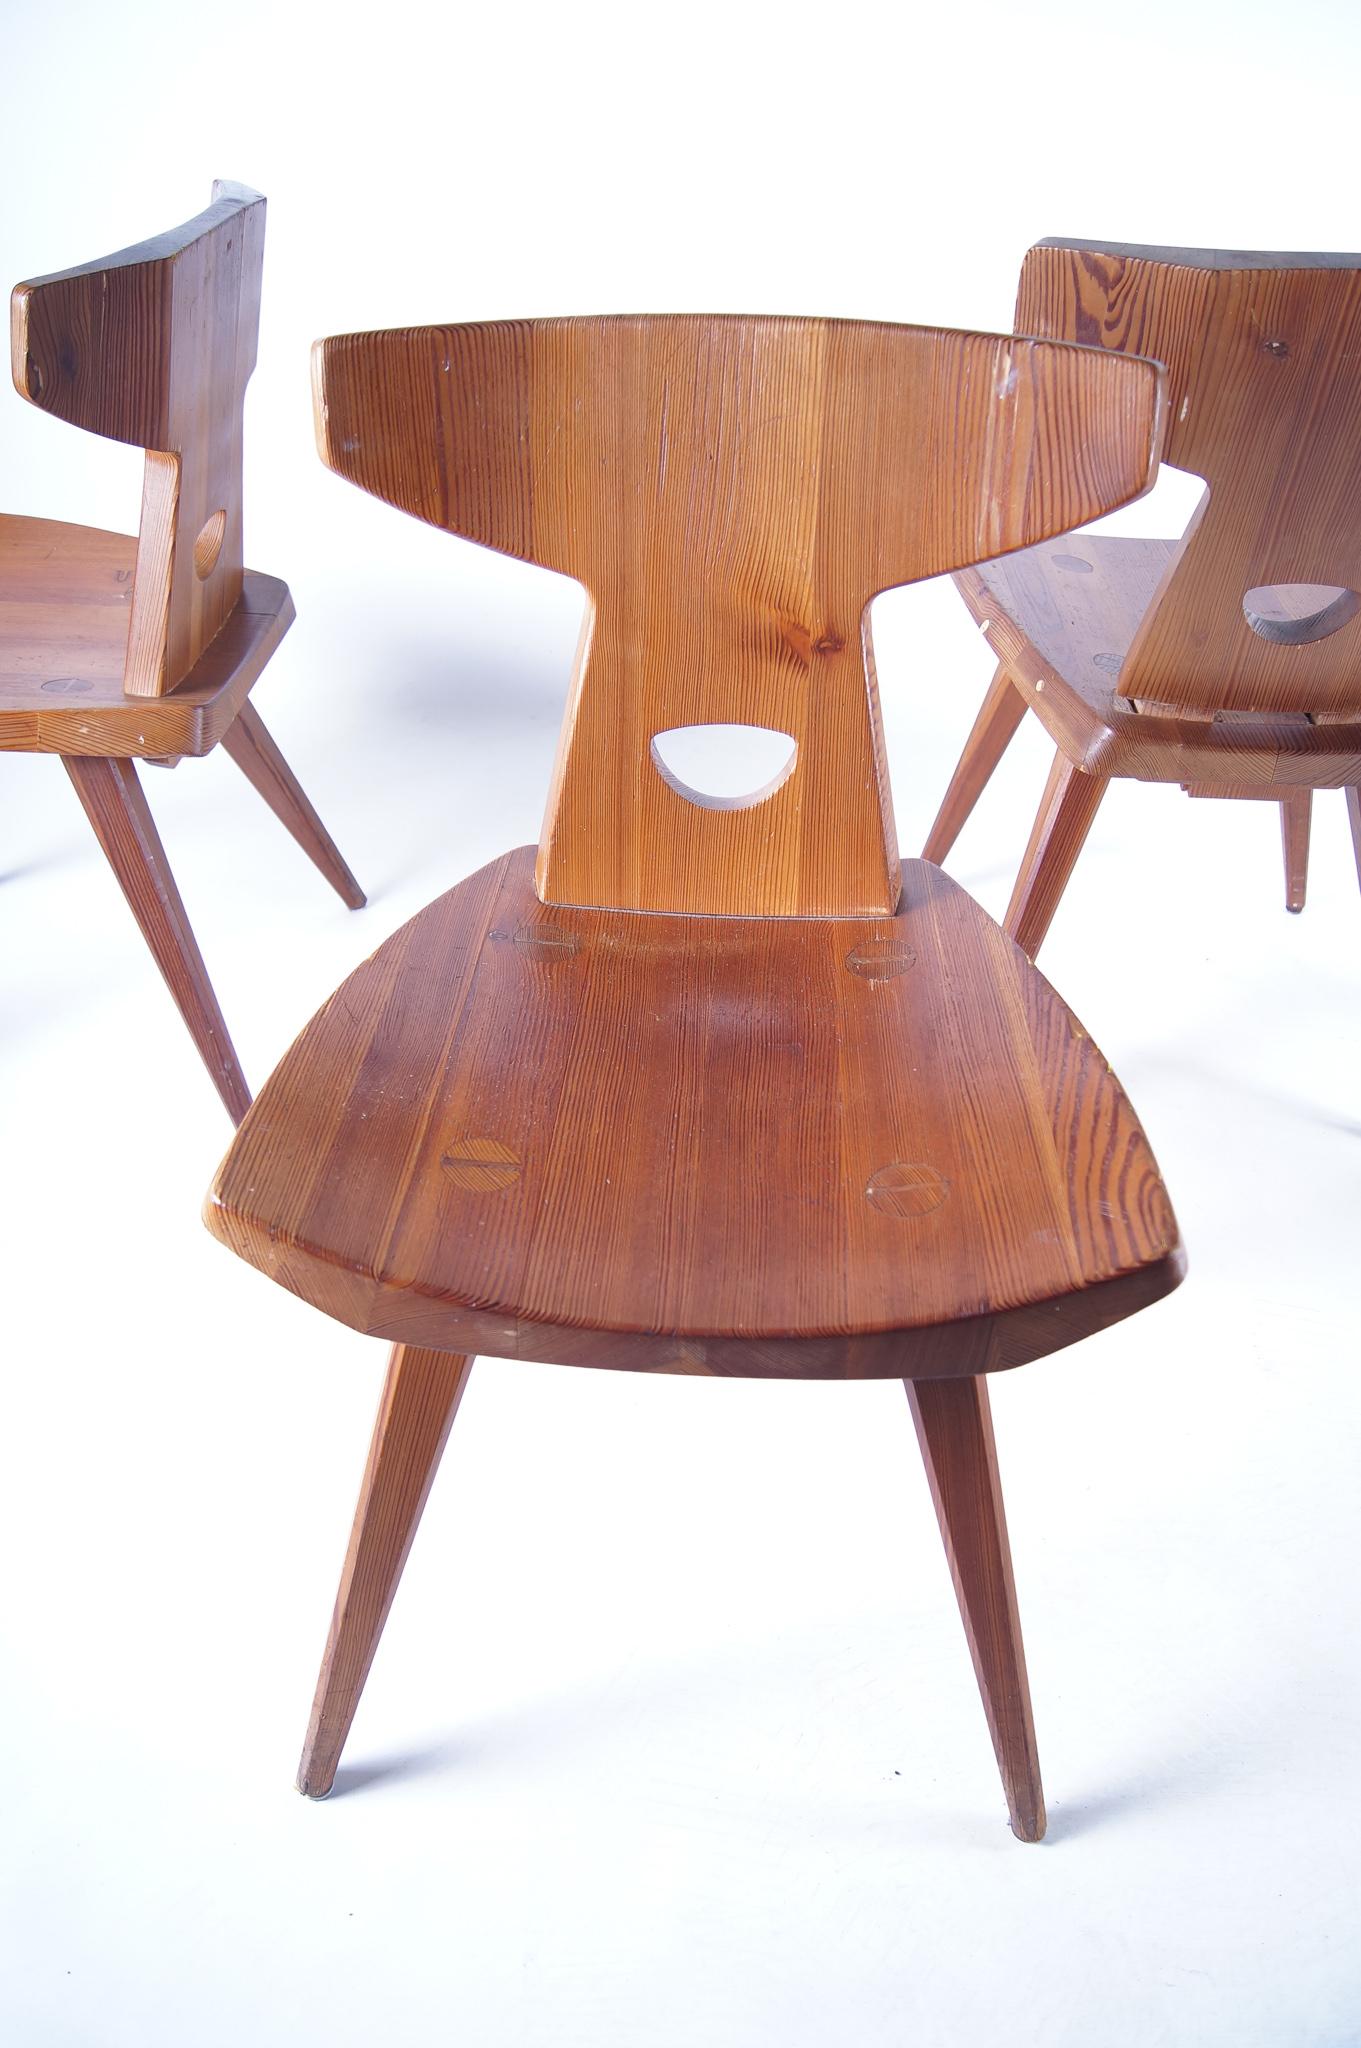 Mid-20th Century 1960s Jacob Kielland-Brandt Dining Room Chairs for I. Christiansen, Set of 4